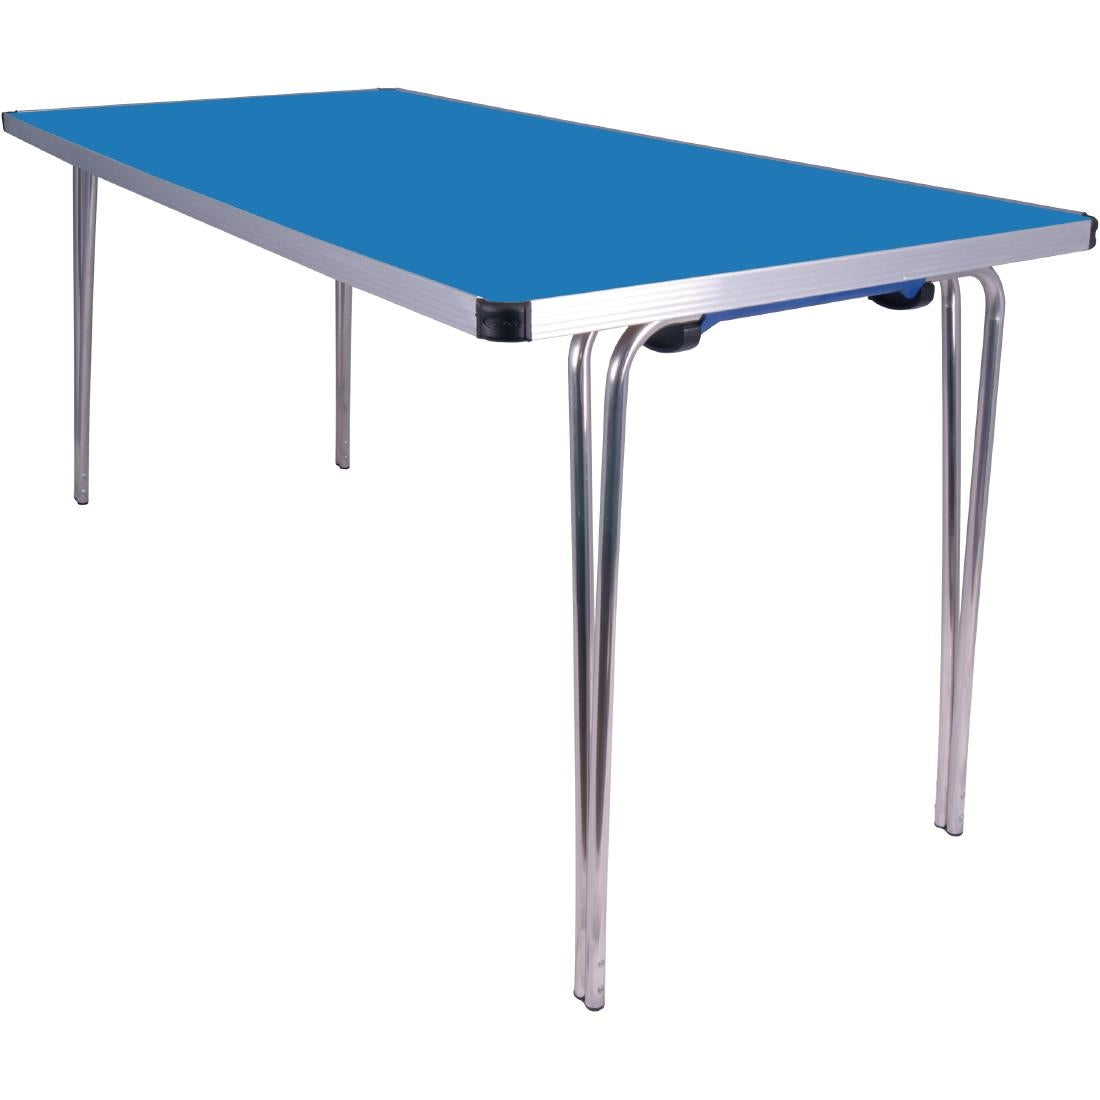 DM607 Gopak Contour Folding Table Blue 5ft JD Catering Equipment Solutions Ltd